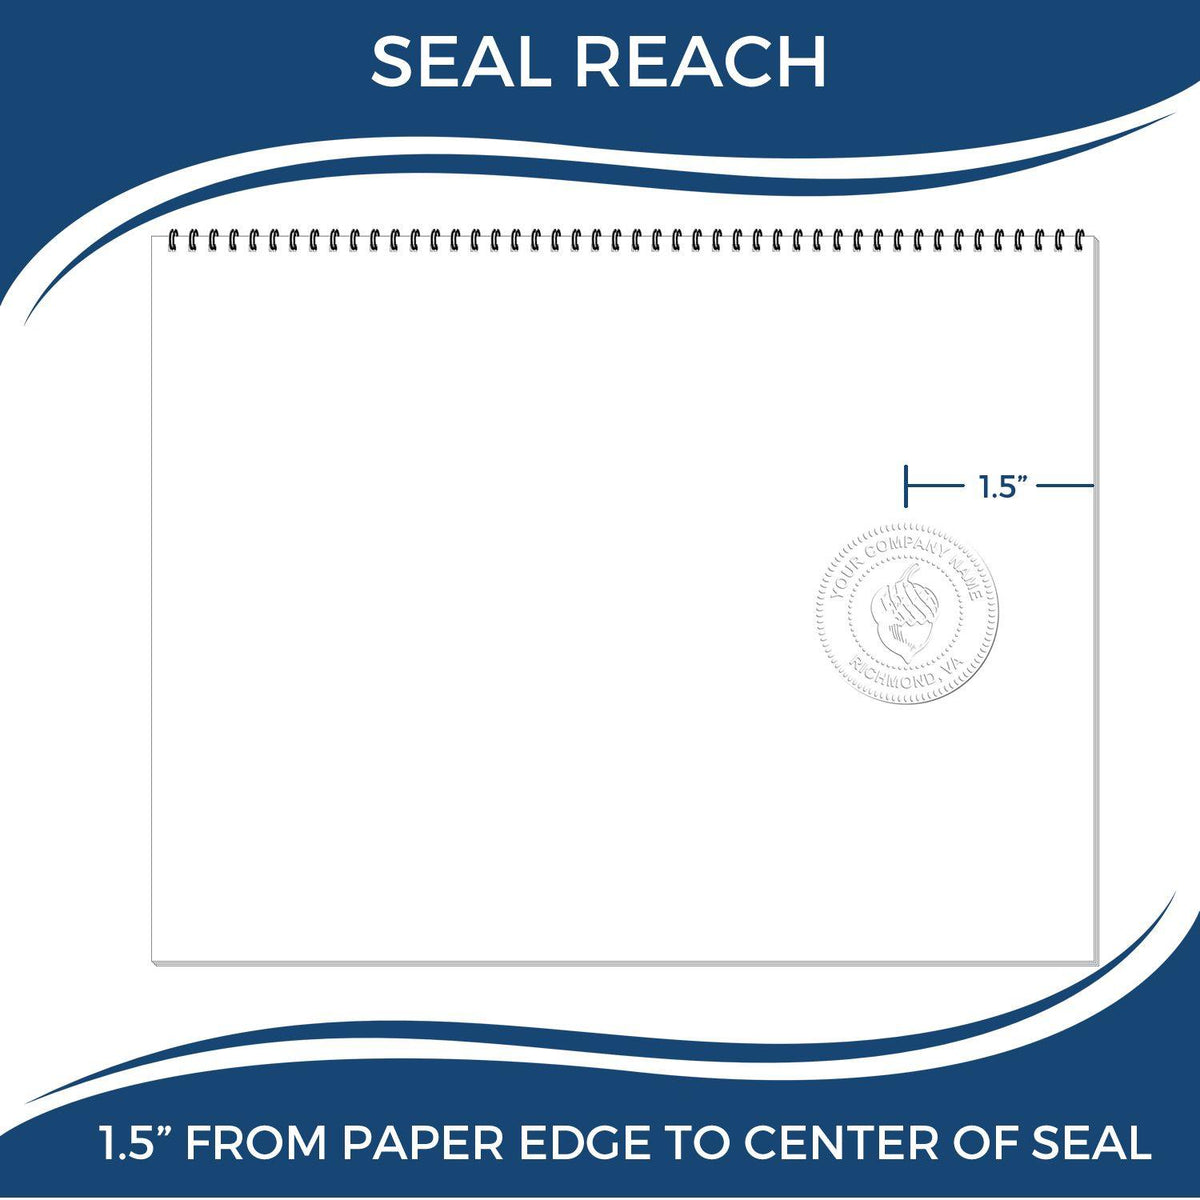 Real Estate Appraiser Soft Seal Embosser - Engineer Seal Stamps - Embosser Type_Handheld, Embosser Type_Soft Seal, Type of Use_Professional